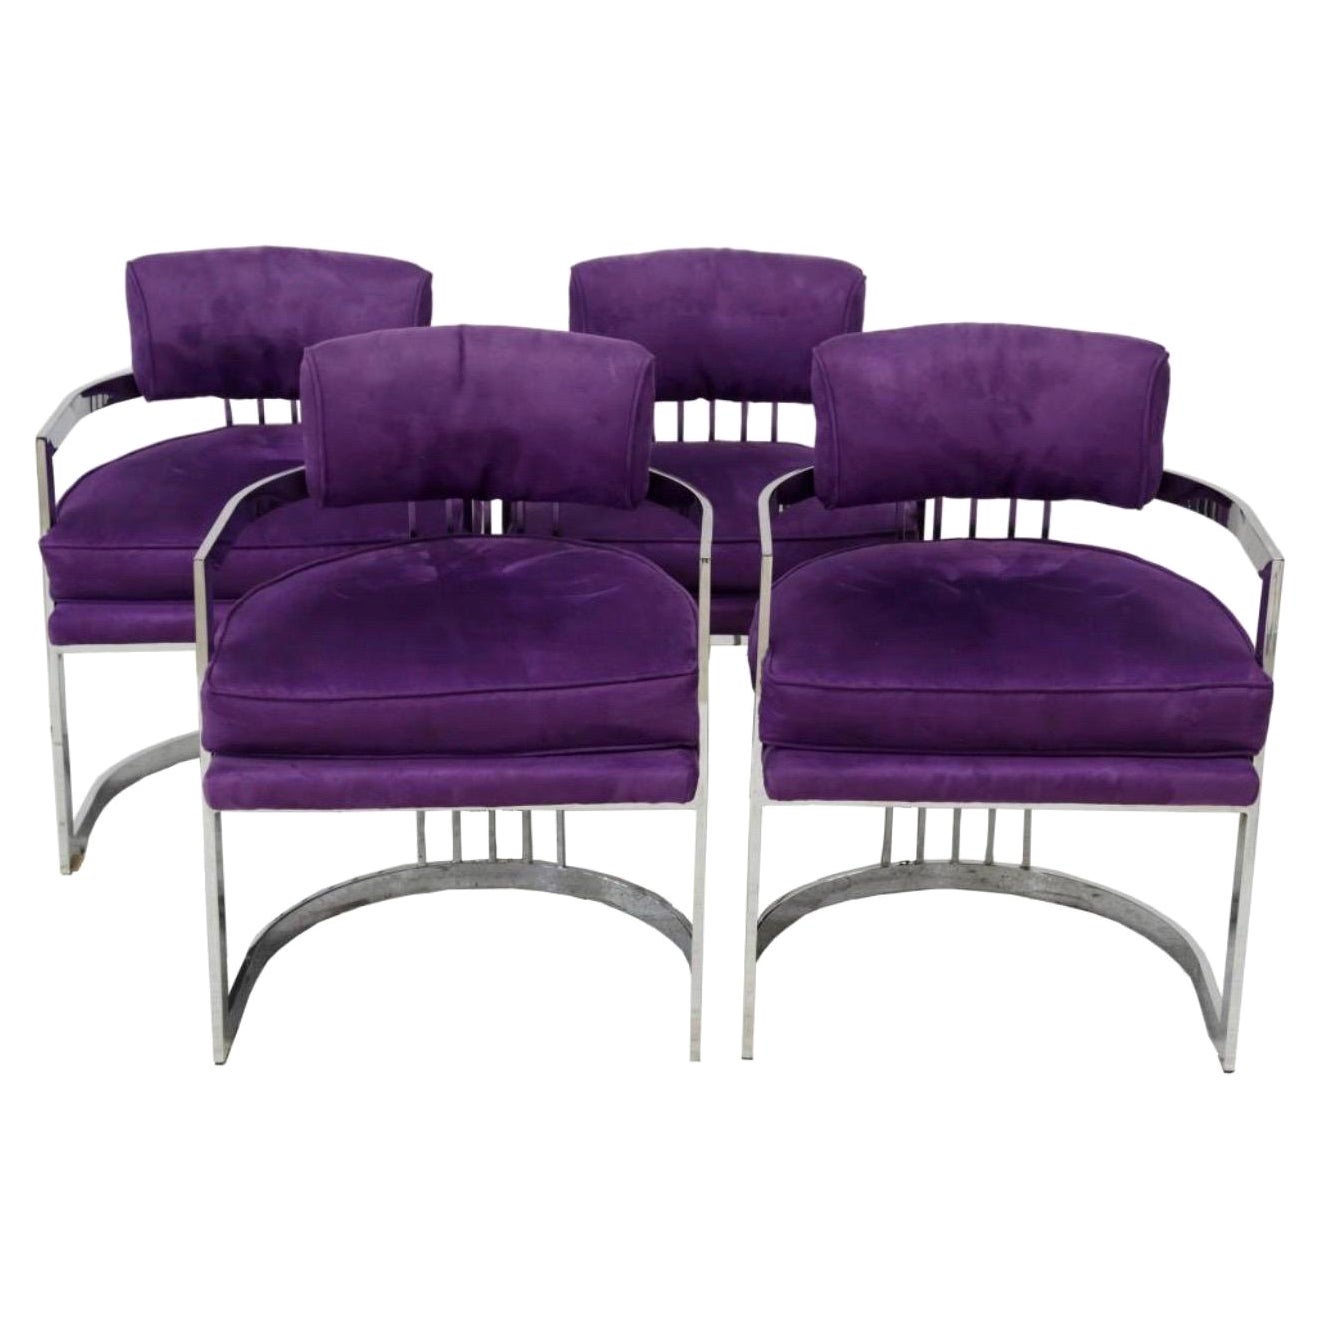 4 Milo Baughman Chrome Chairs in Purple Upholstery 